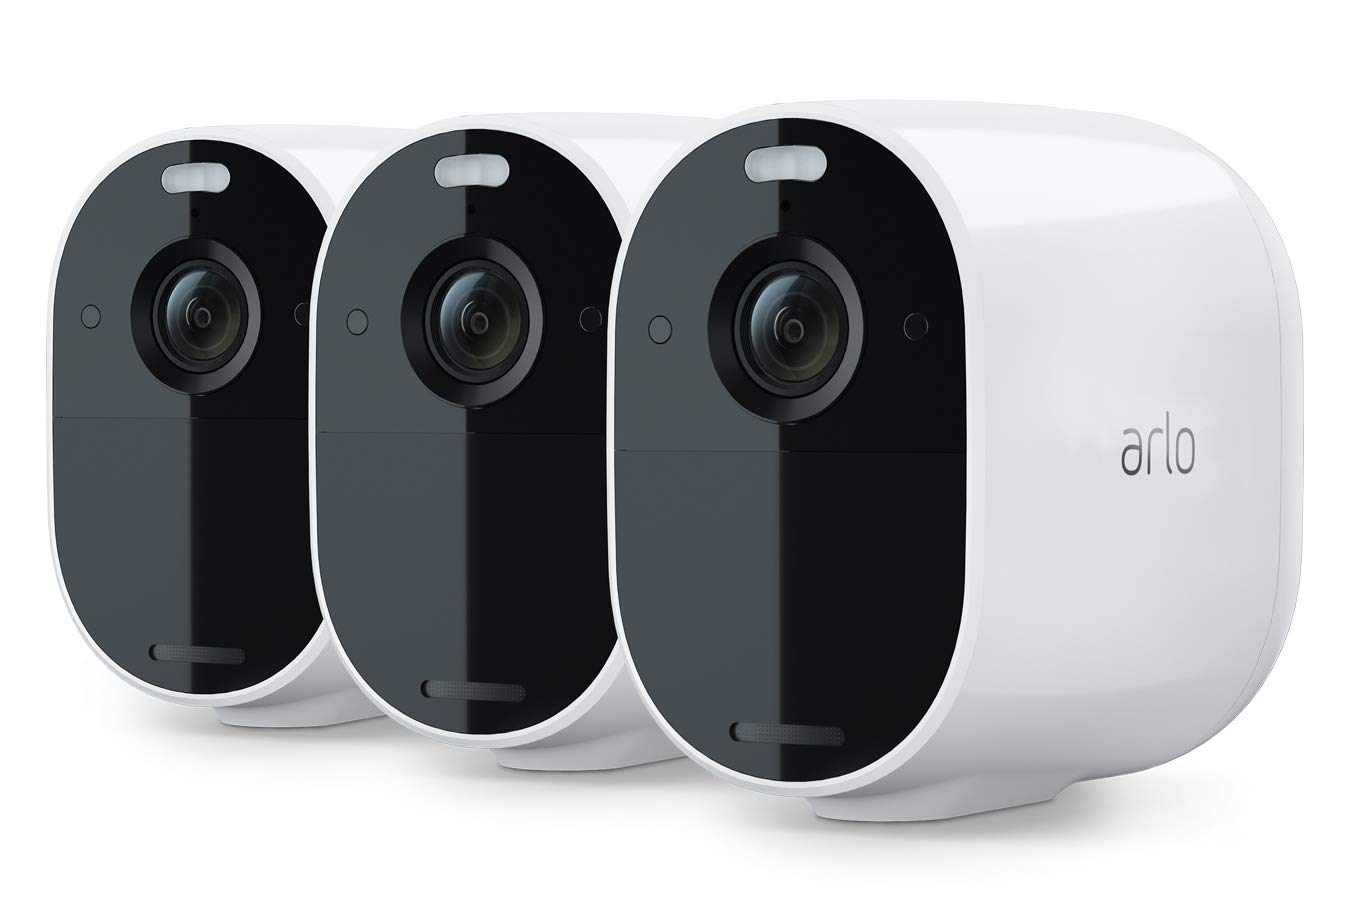 Features Of Arlo Security Cameras